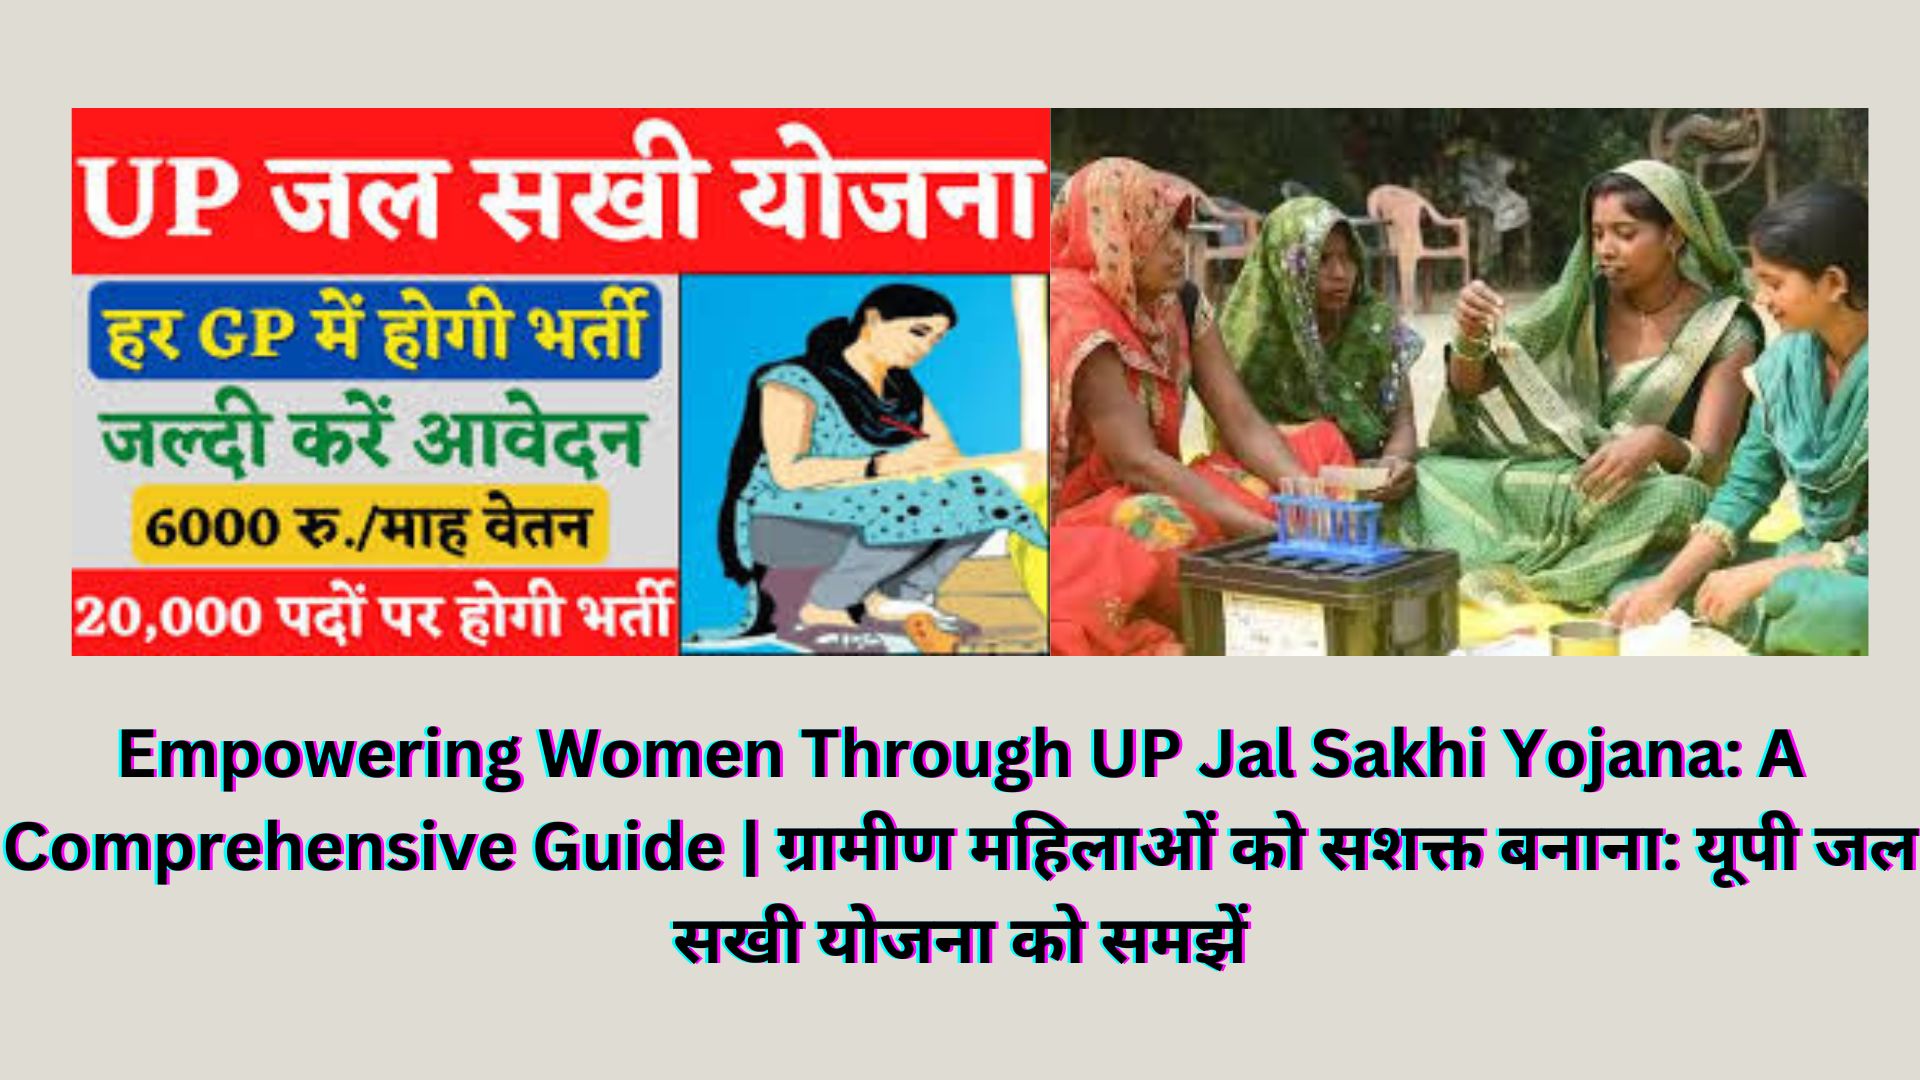 Empowering Women Through UP Jal Sakhi Yojana: A Comprehensive Guide | ग्रामीण महिलाओं को सशक्त बनाना: यूपी जल सखी योजना को समझें